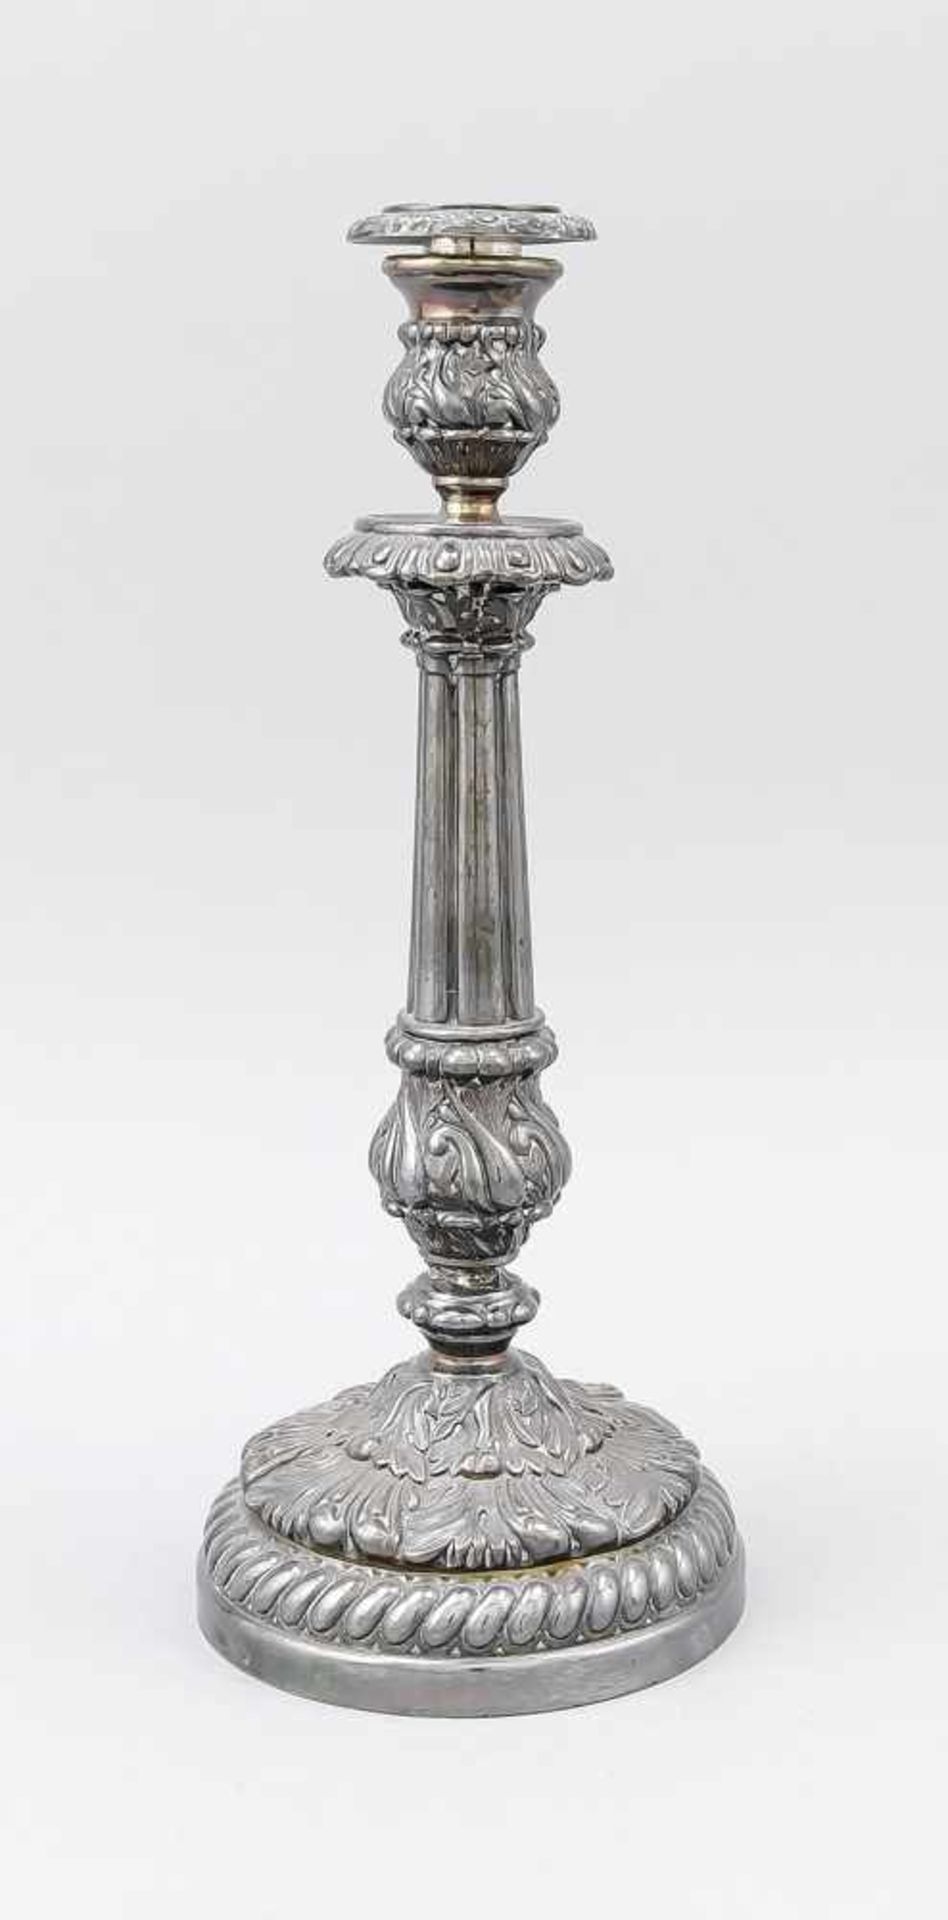 Leuchter, Frankreich, Anf. 20. Jh., MZ: Favier, Silber 950/000, runder gewölbter Stand,Säulenschaft,